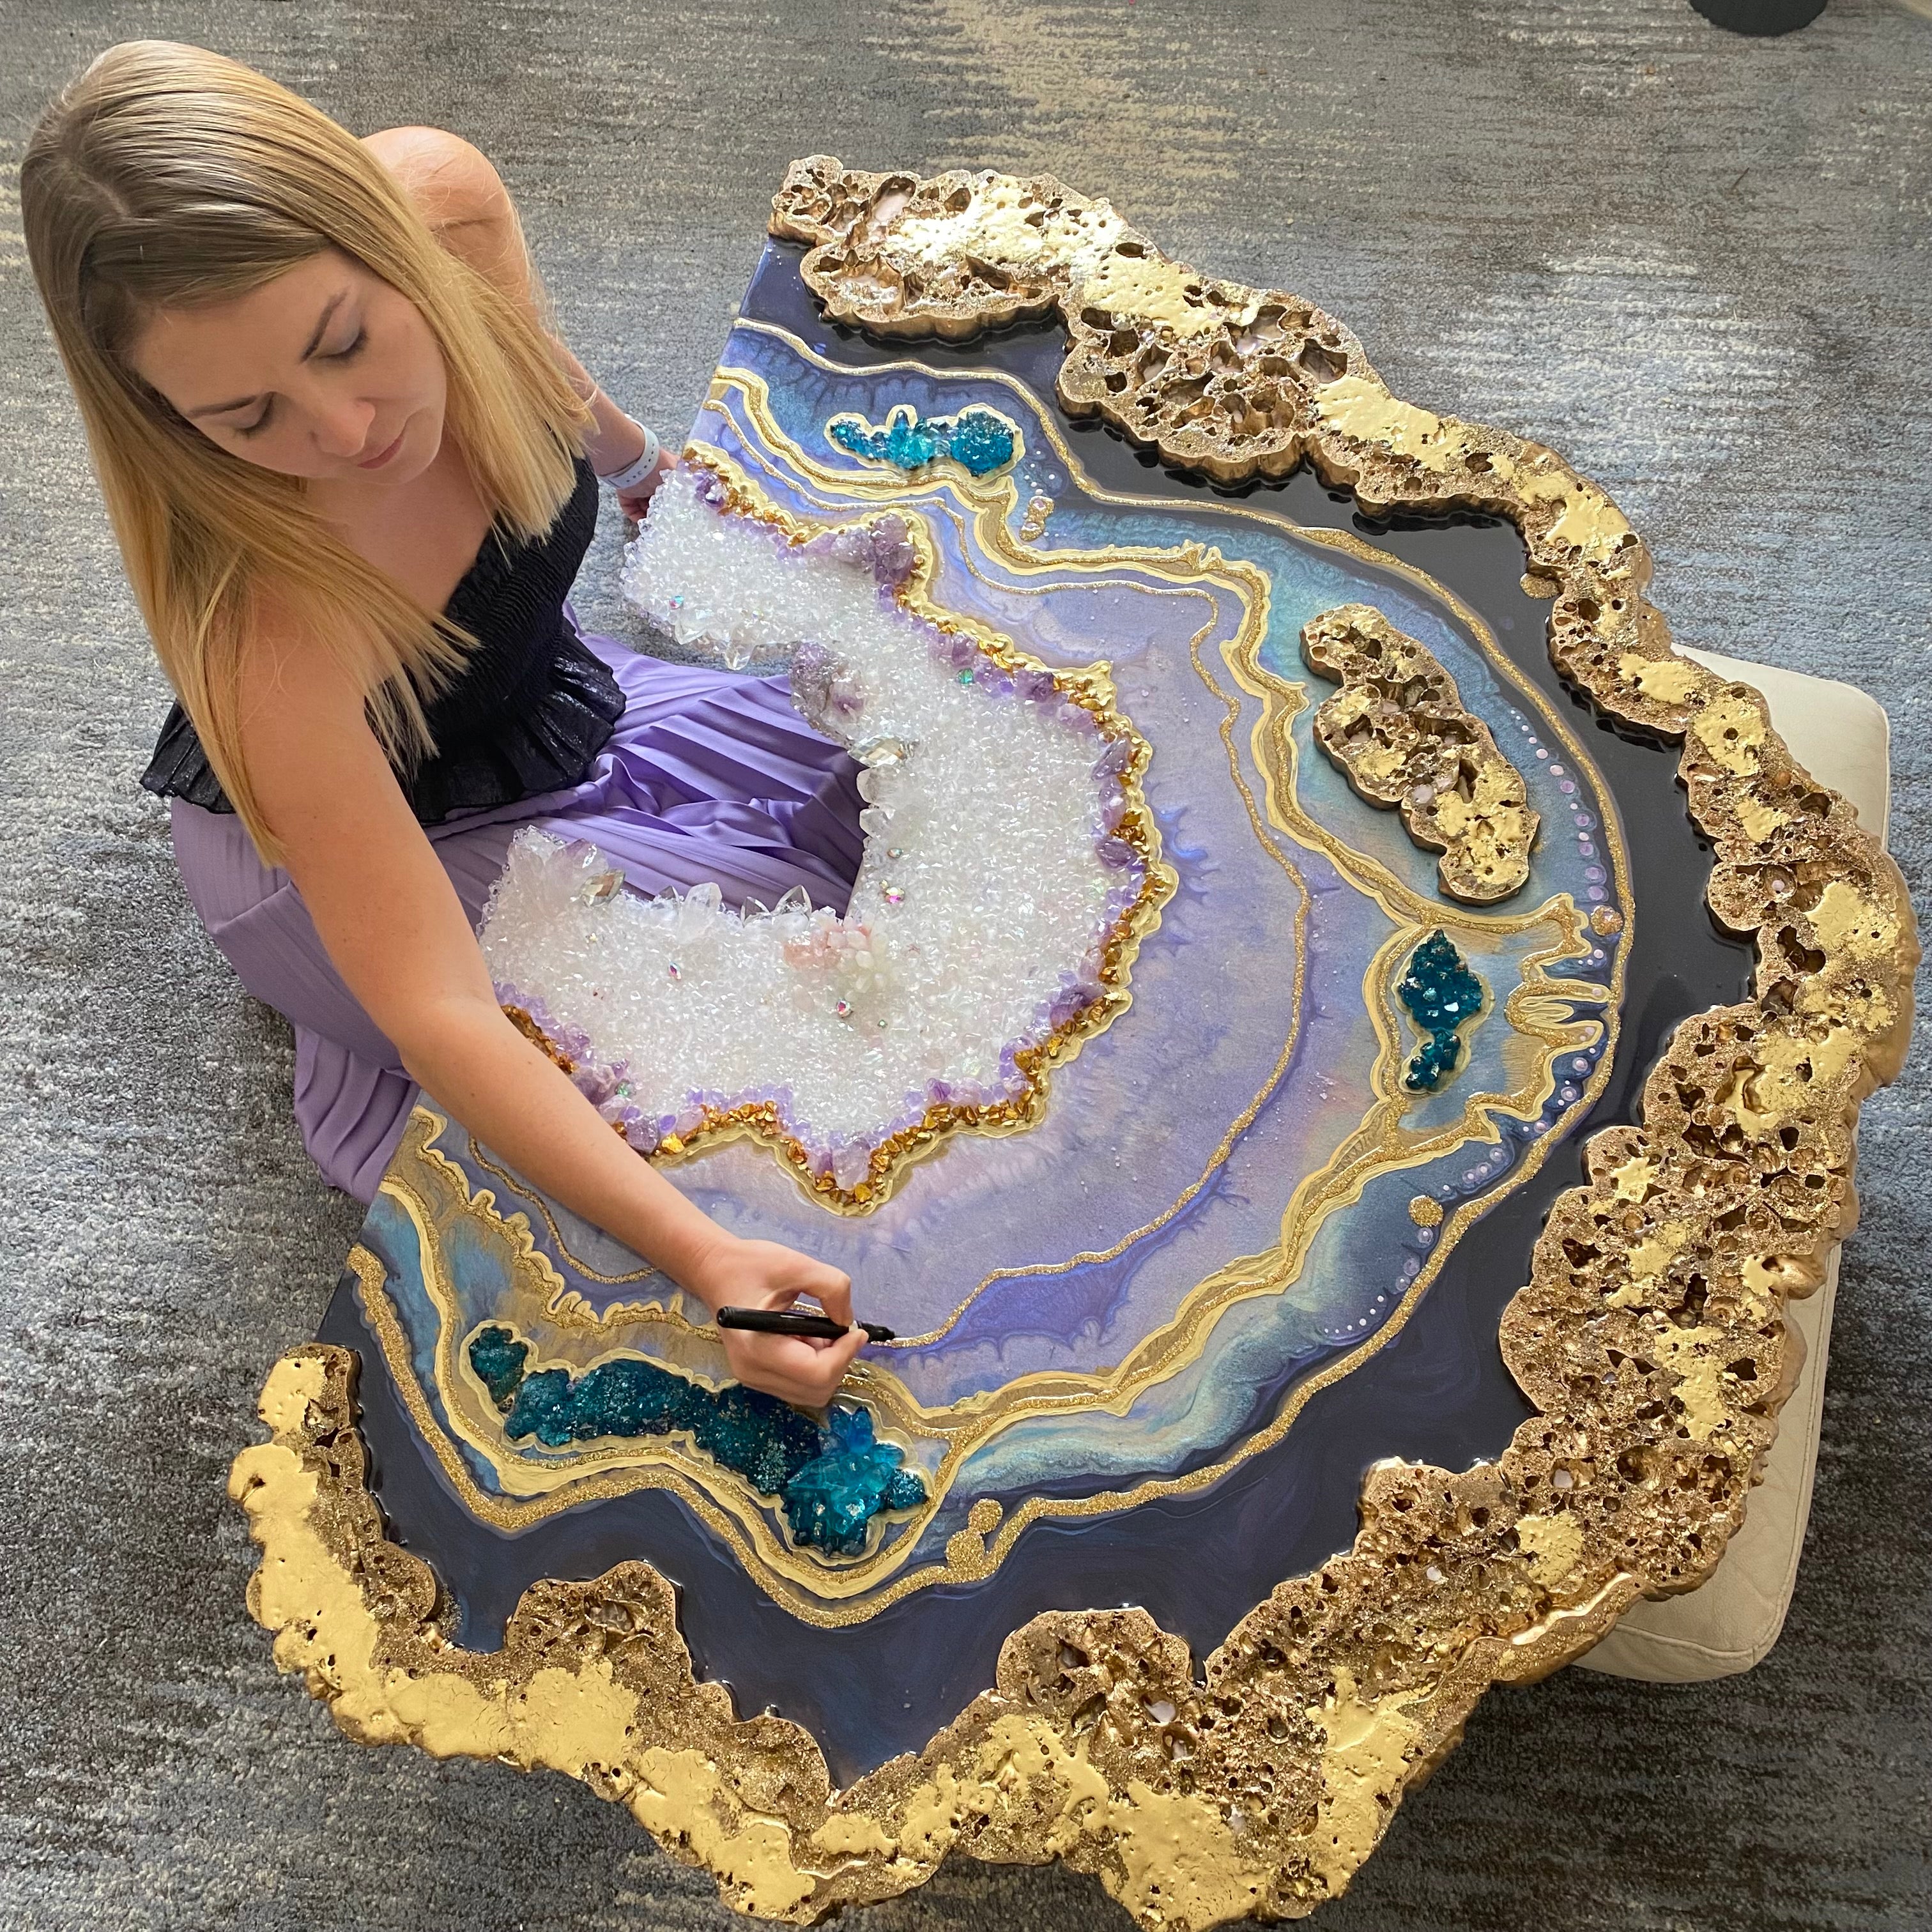 Amethyst. Freeform Purple and Gold Geode Gemstone Artwork with Amethysts